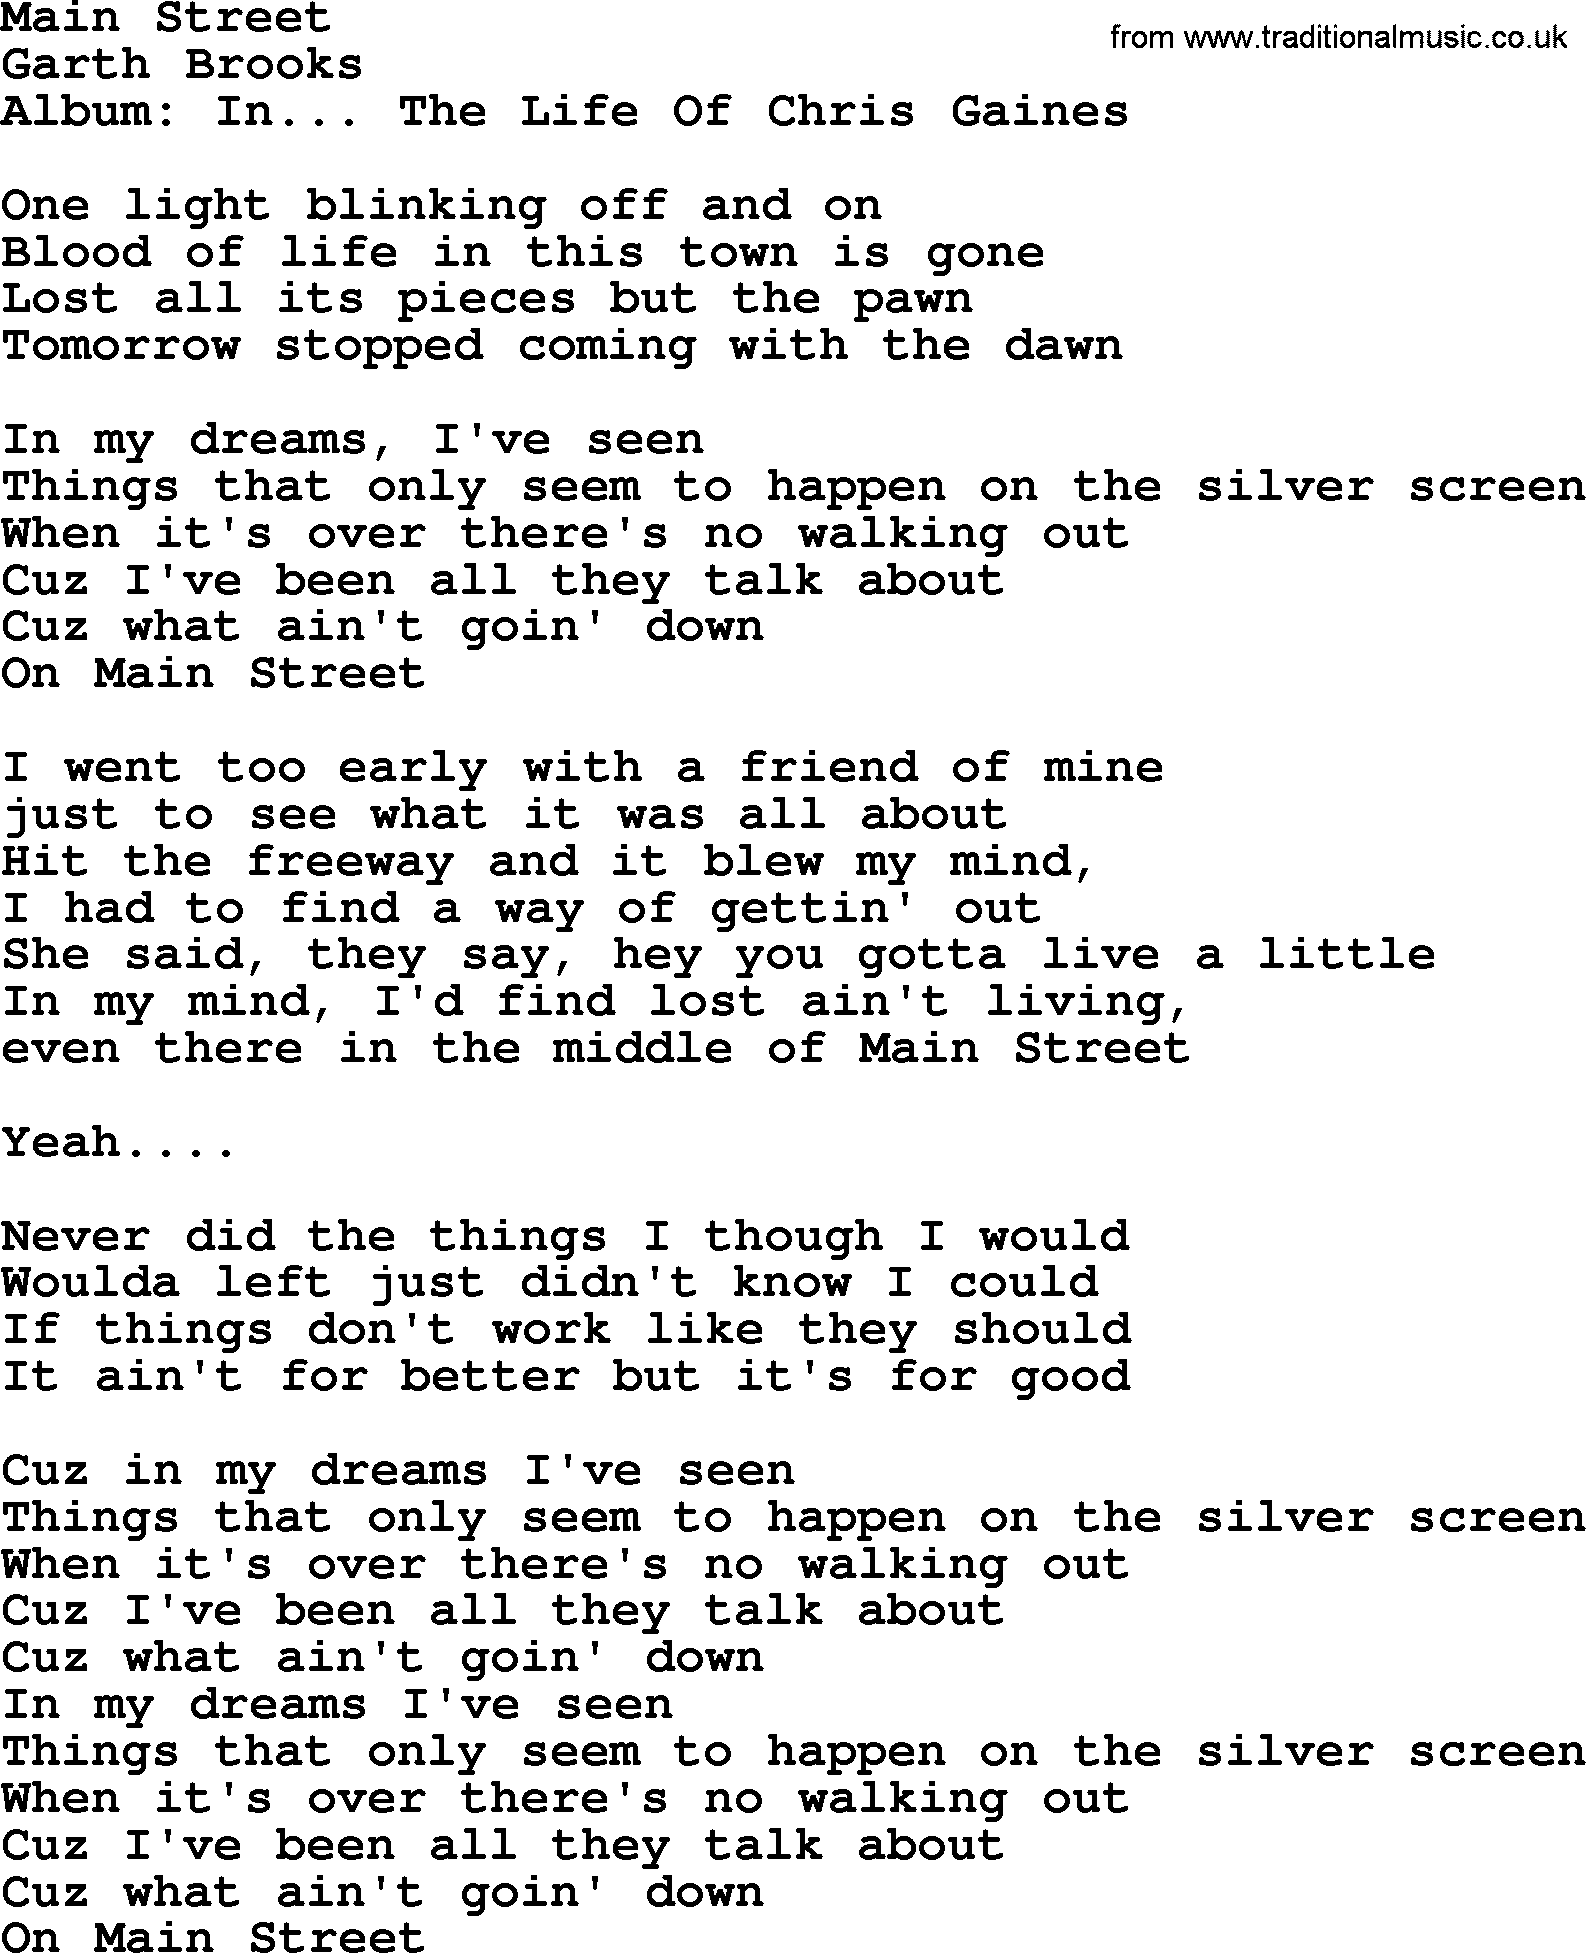 Garth Brooks song: Main Street, lyrics